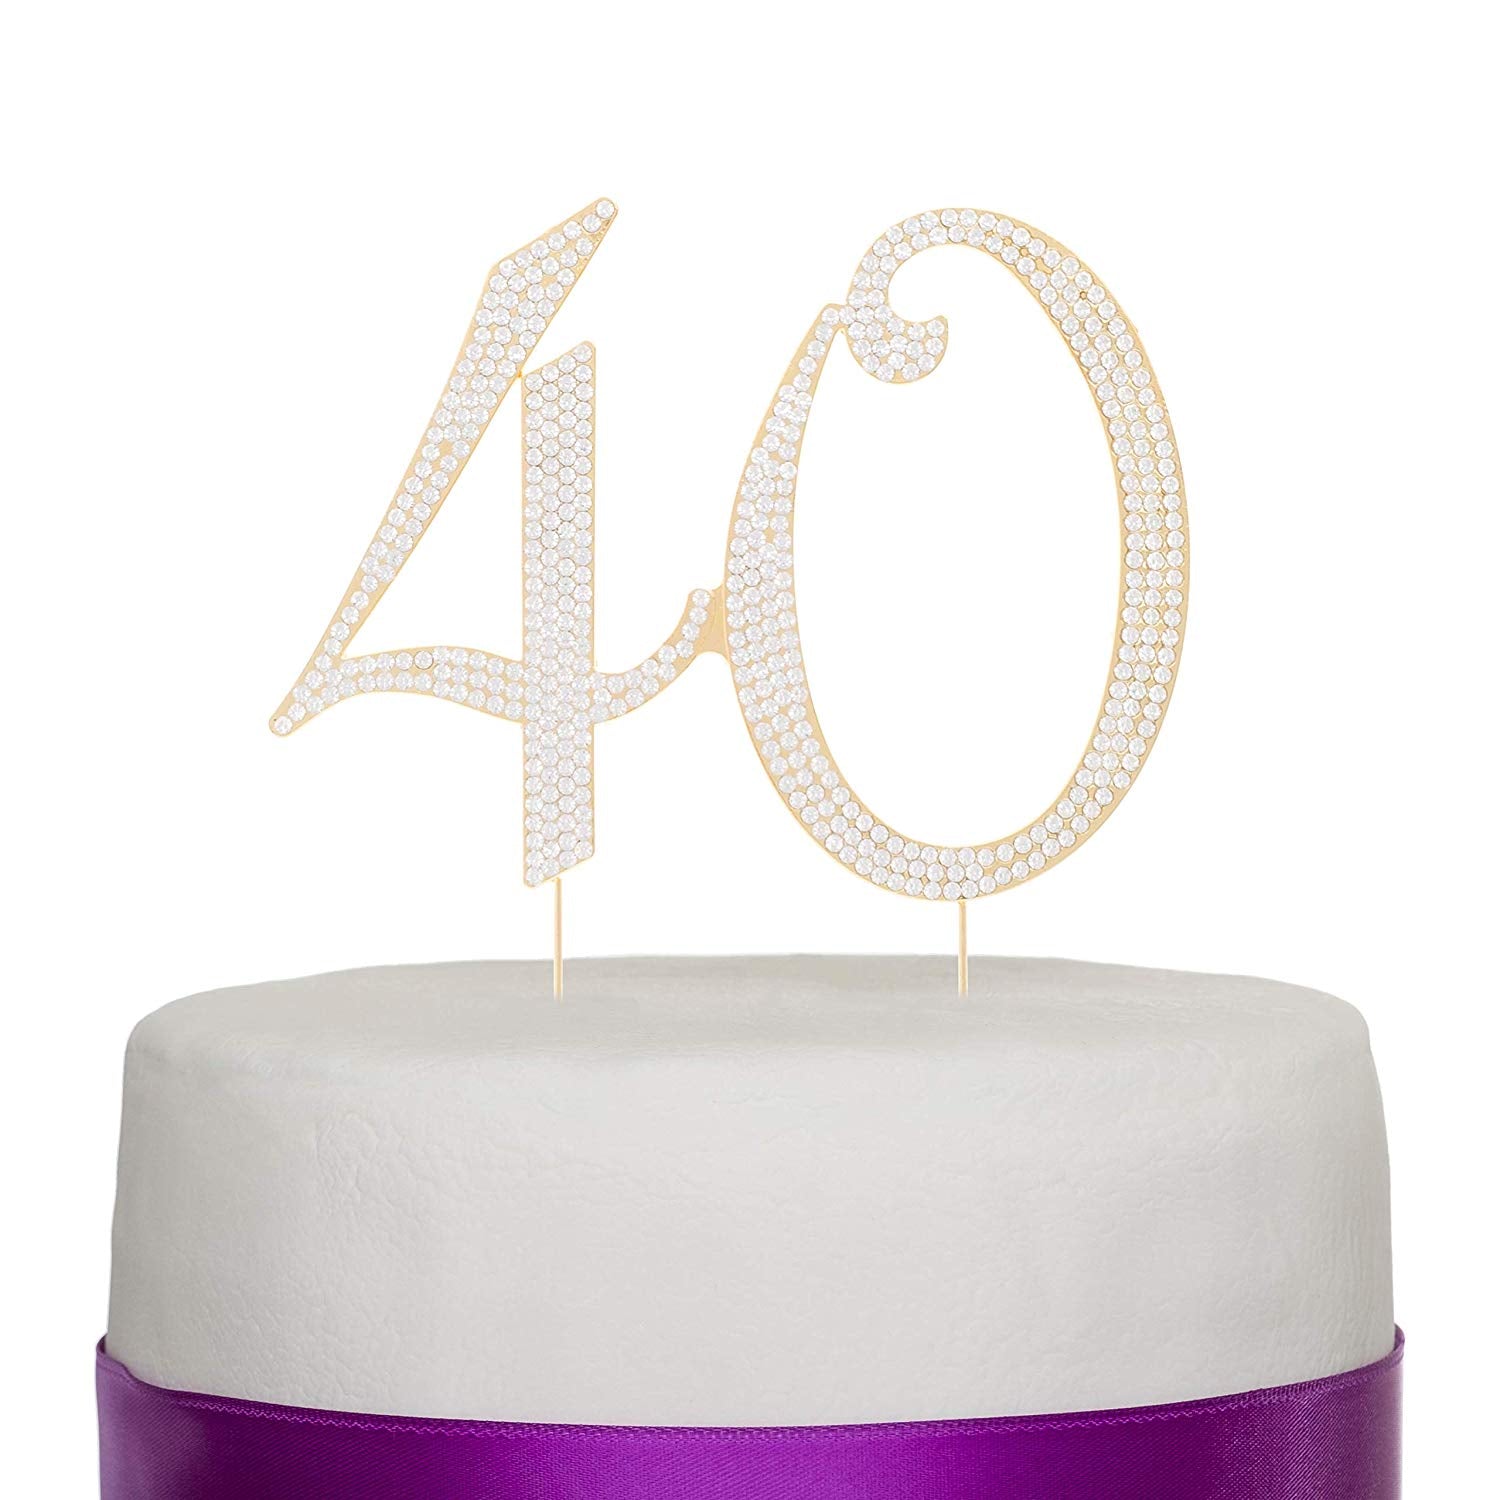 40 Cake Topper - Gold